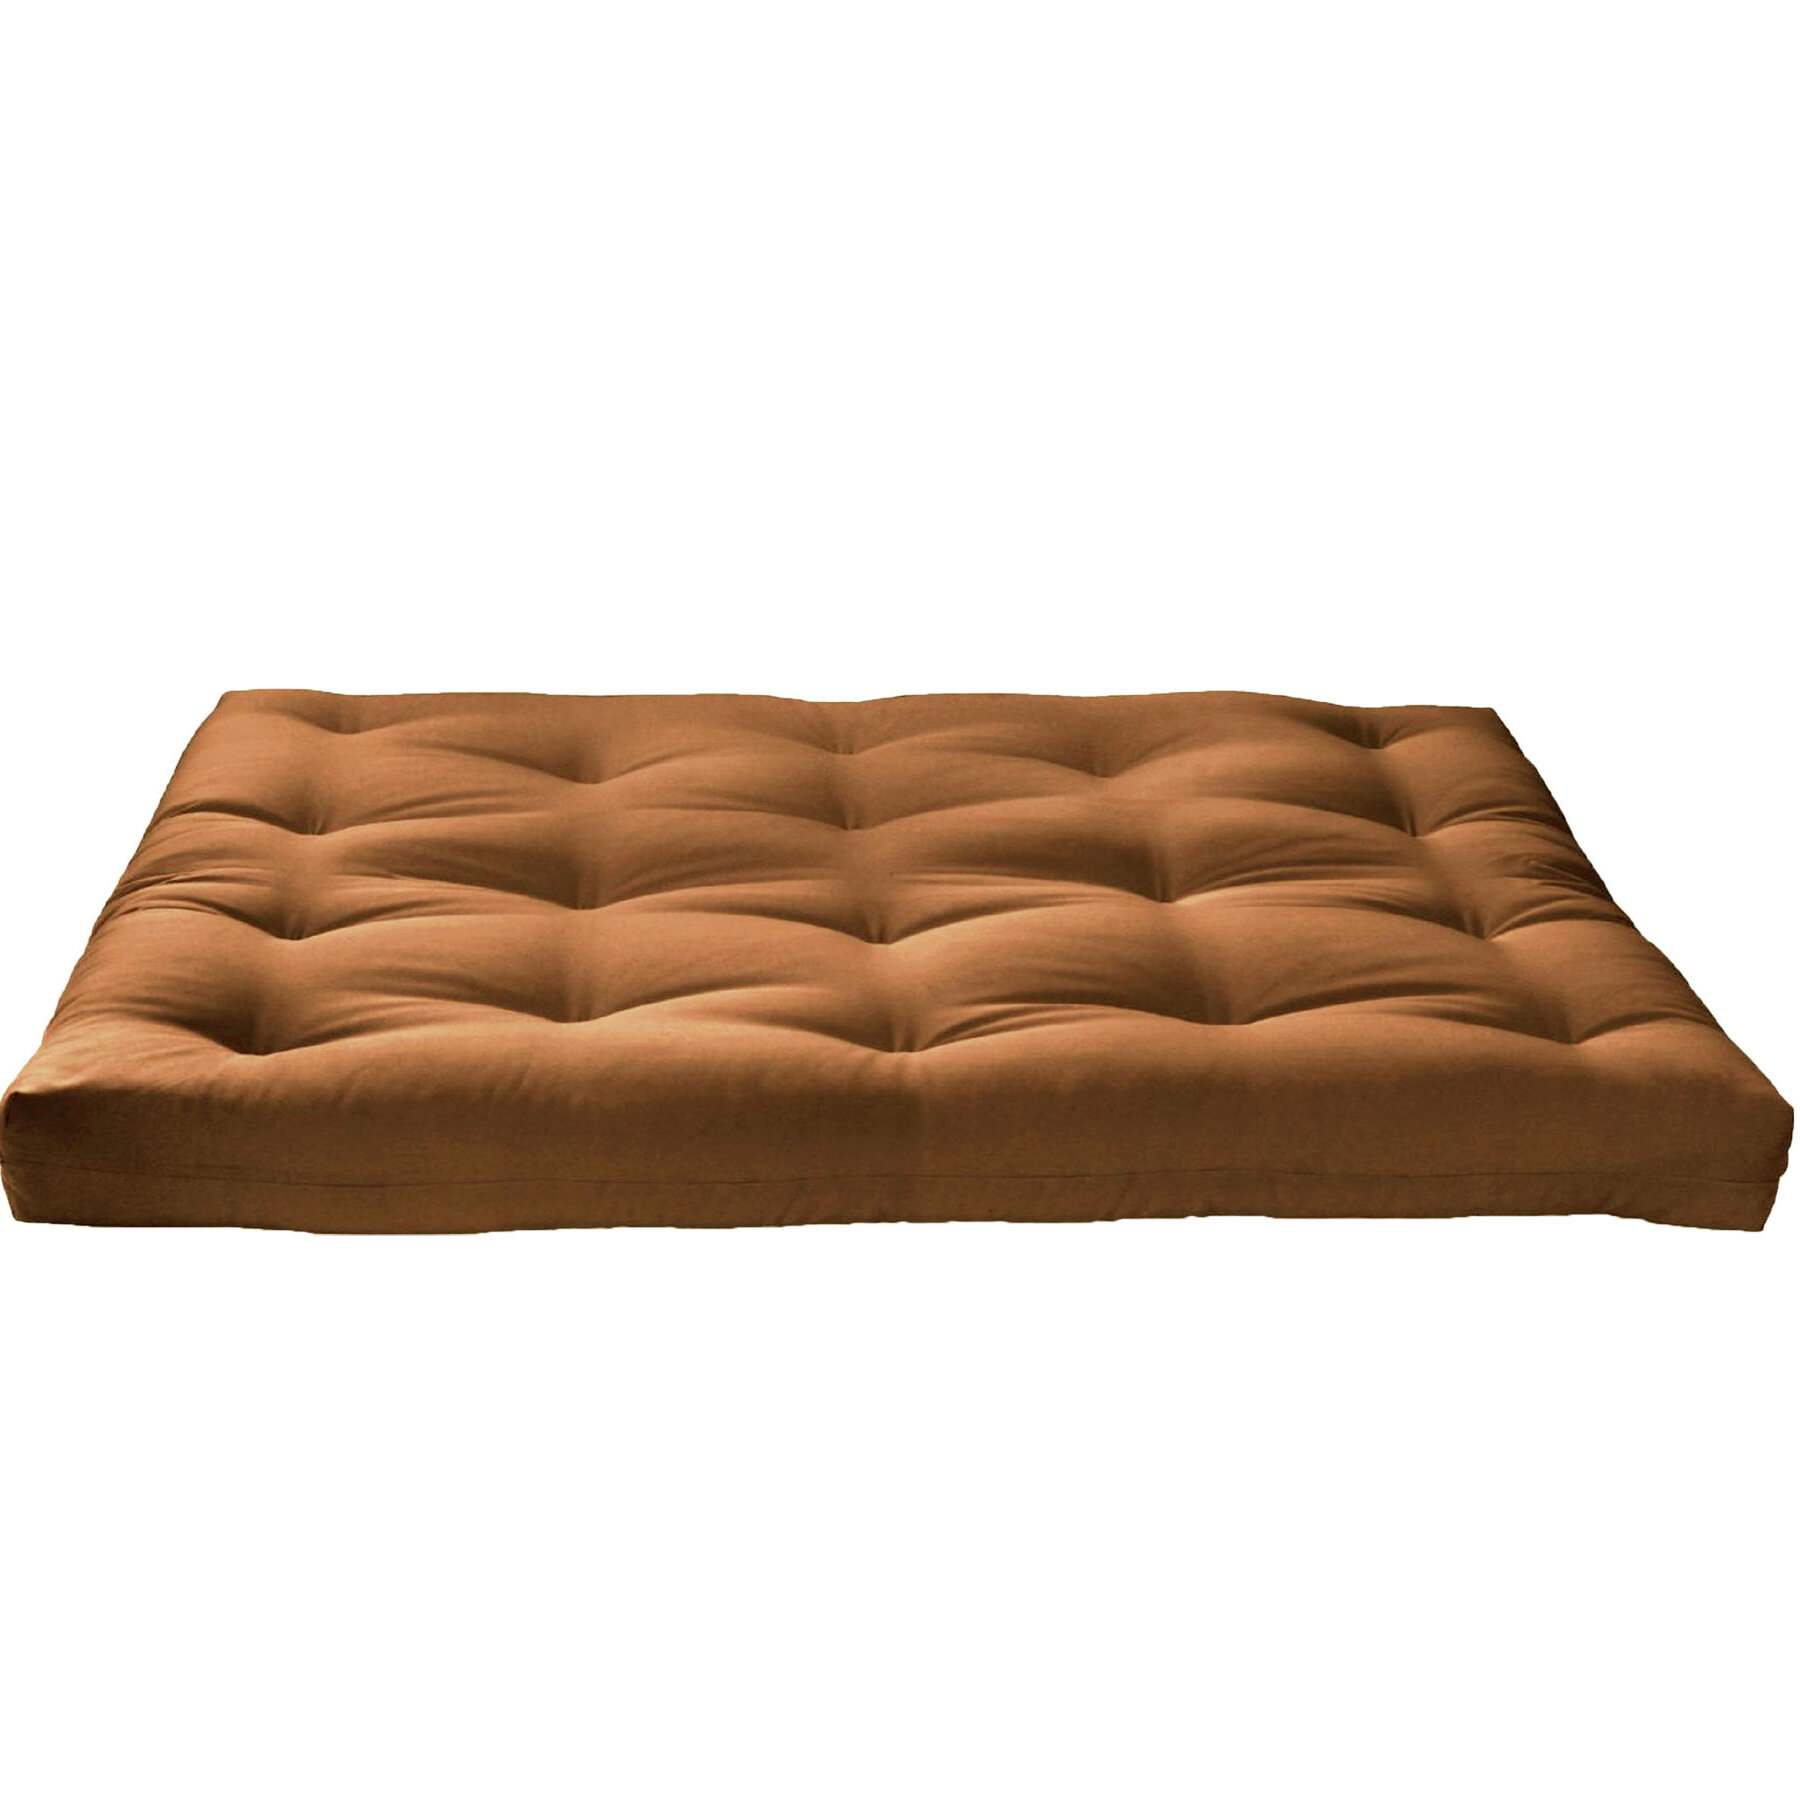 futon mattress for sale near me